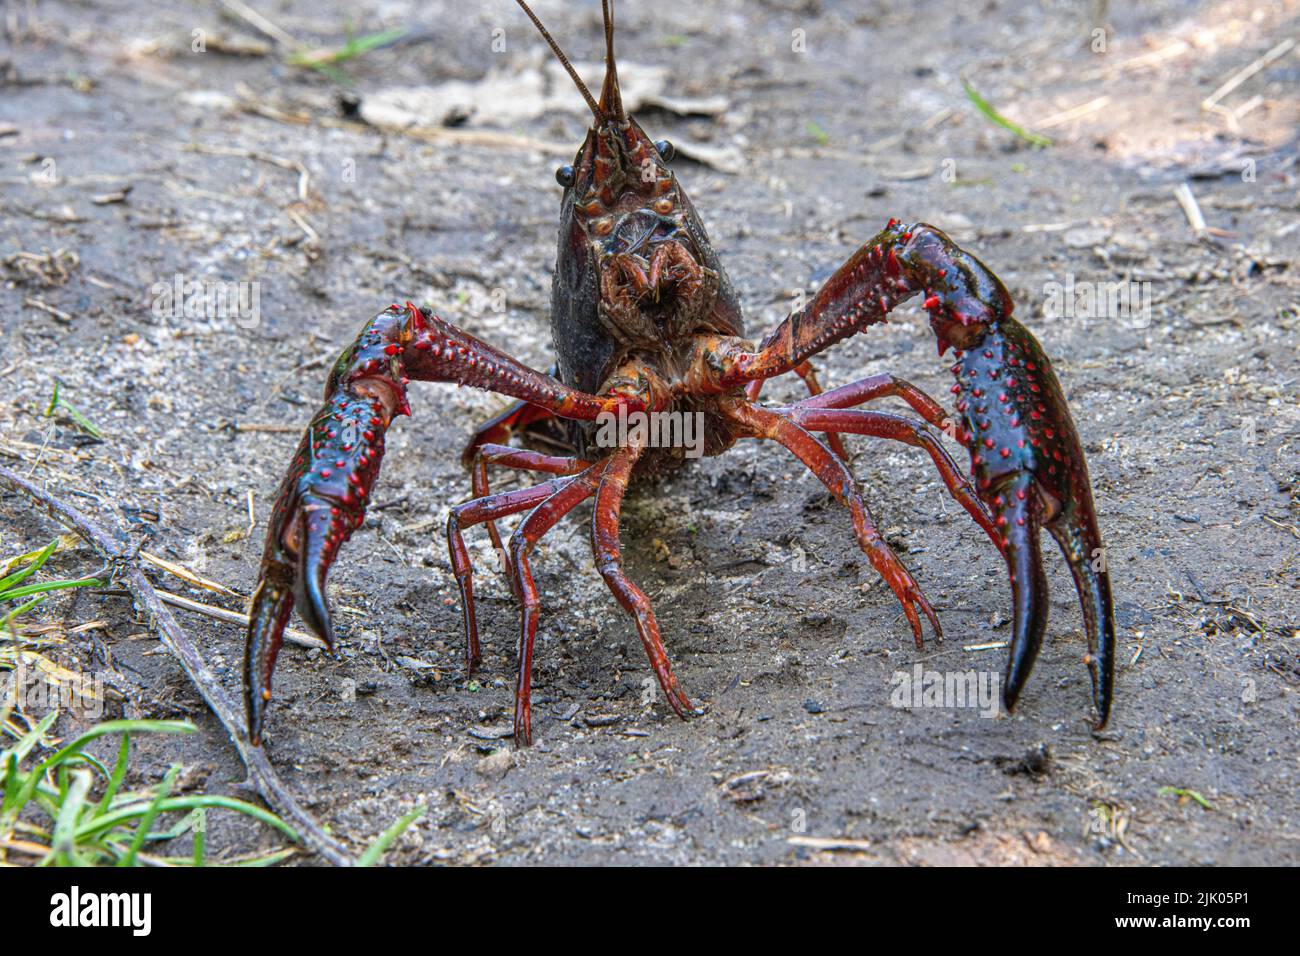 Aggressive crayfish on a walking path Stock Photo